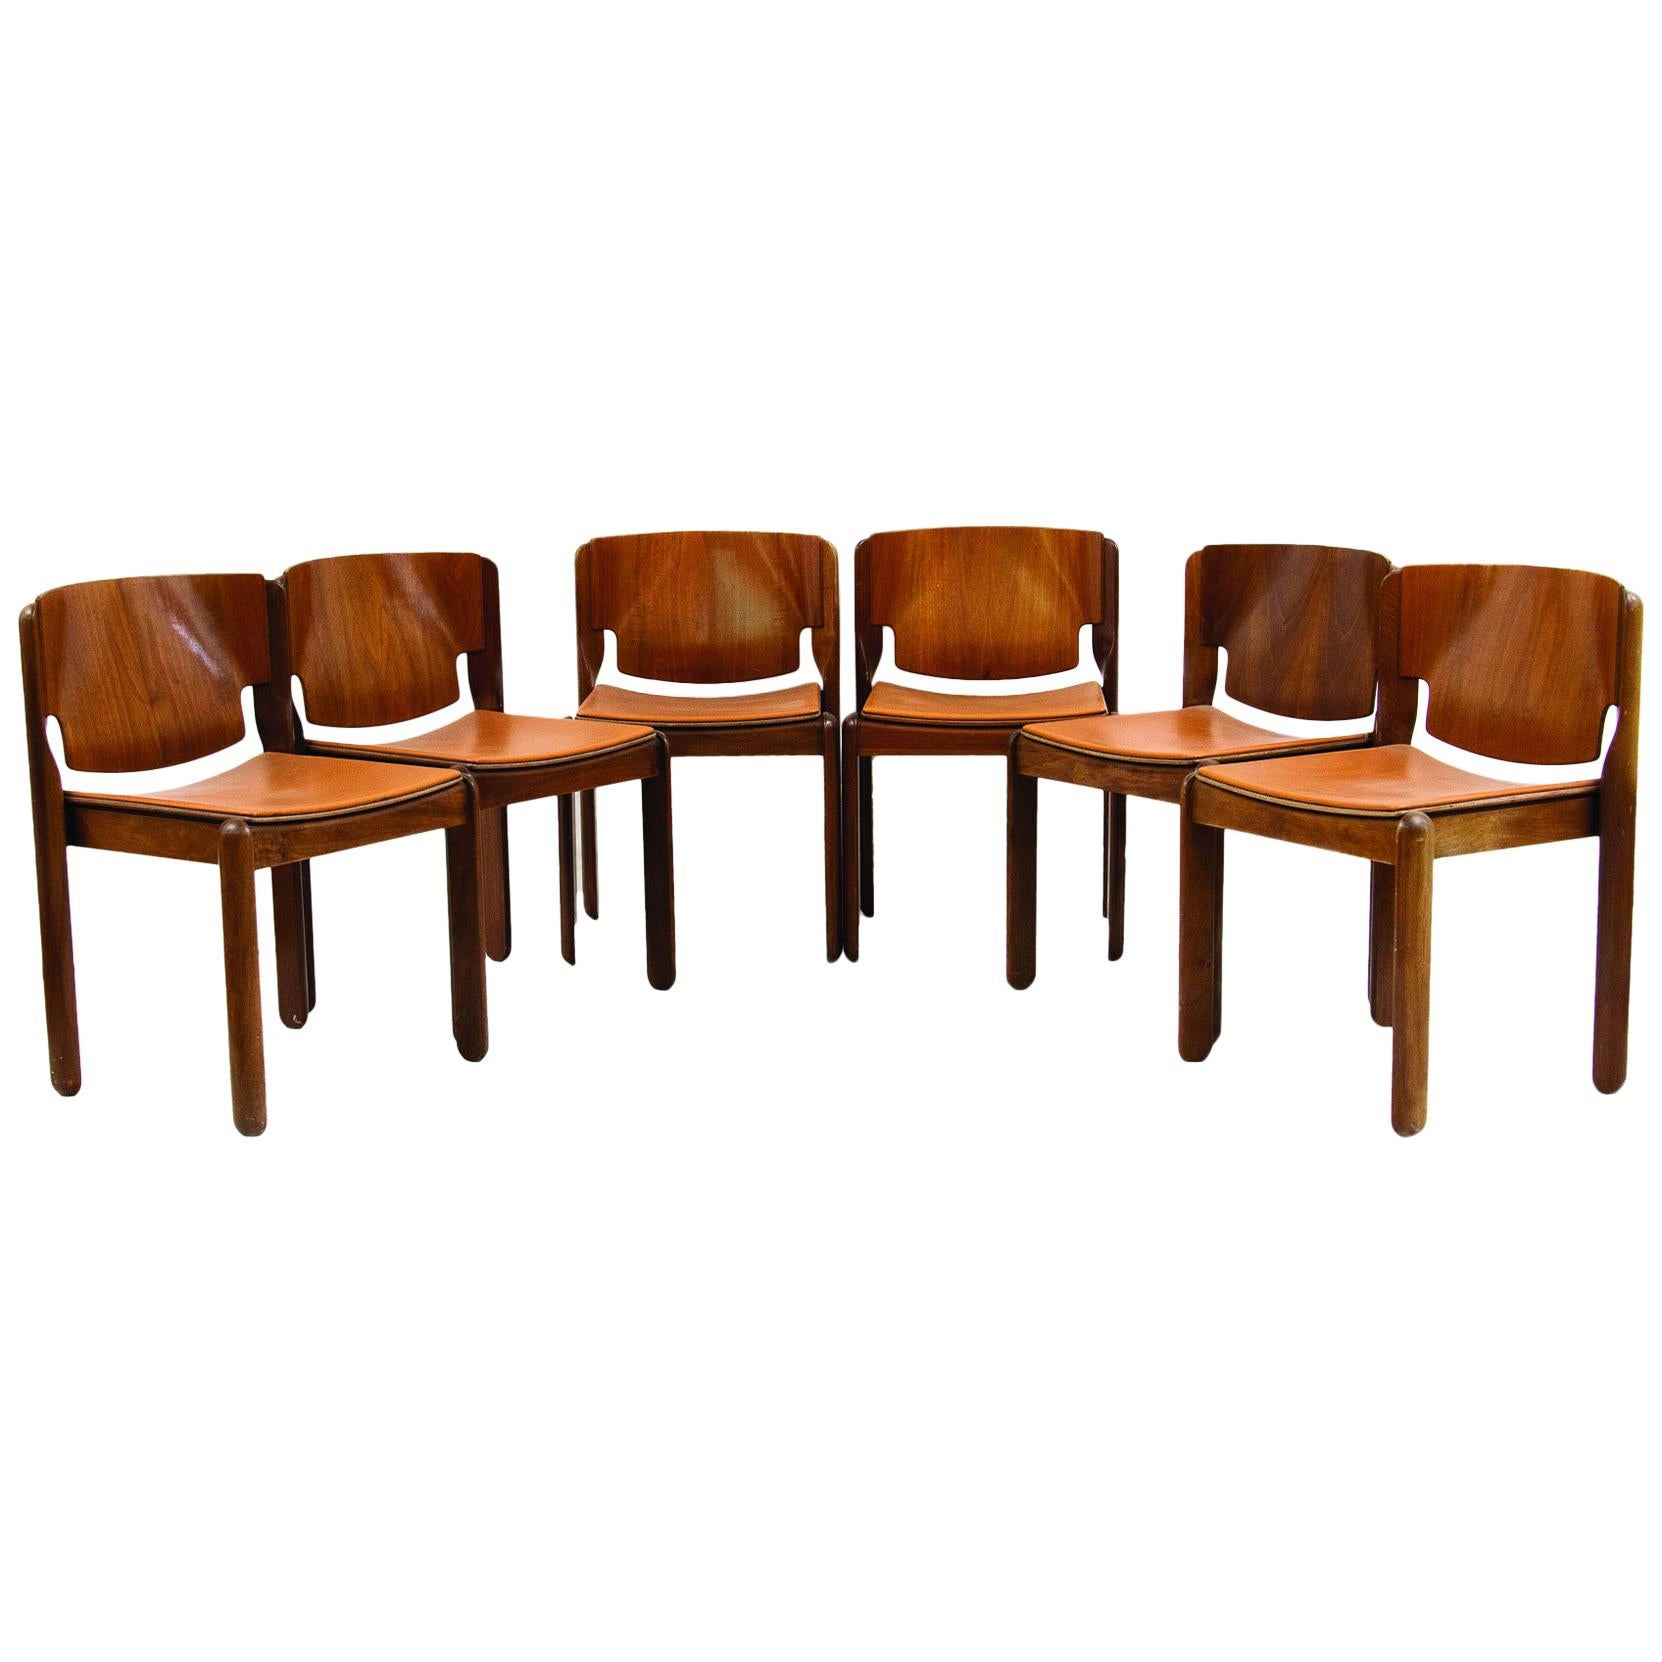 Vico Magistretti, A Set of Six Chairs, Model 122, Cassina, 1960s